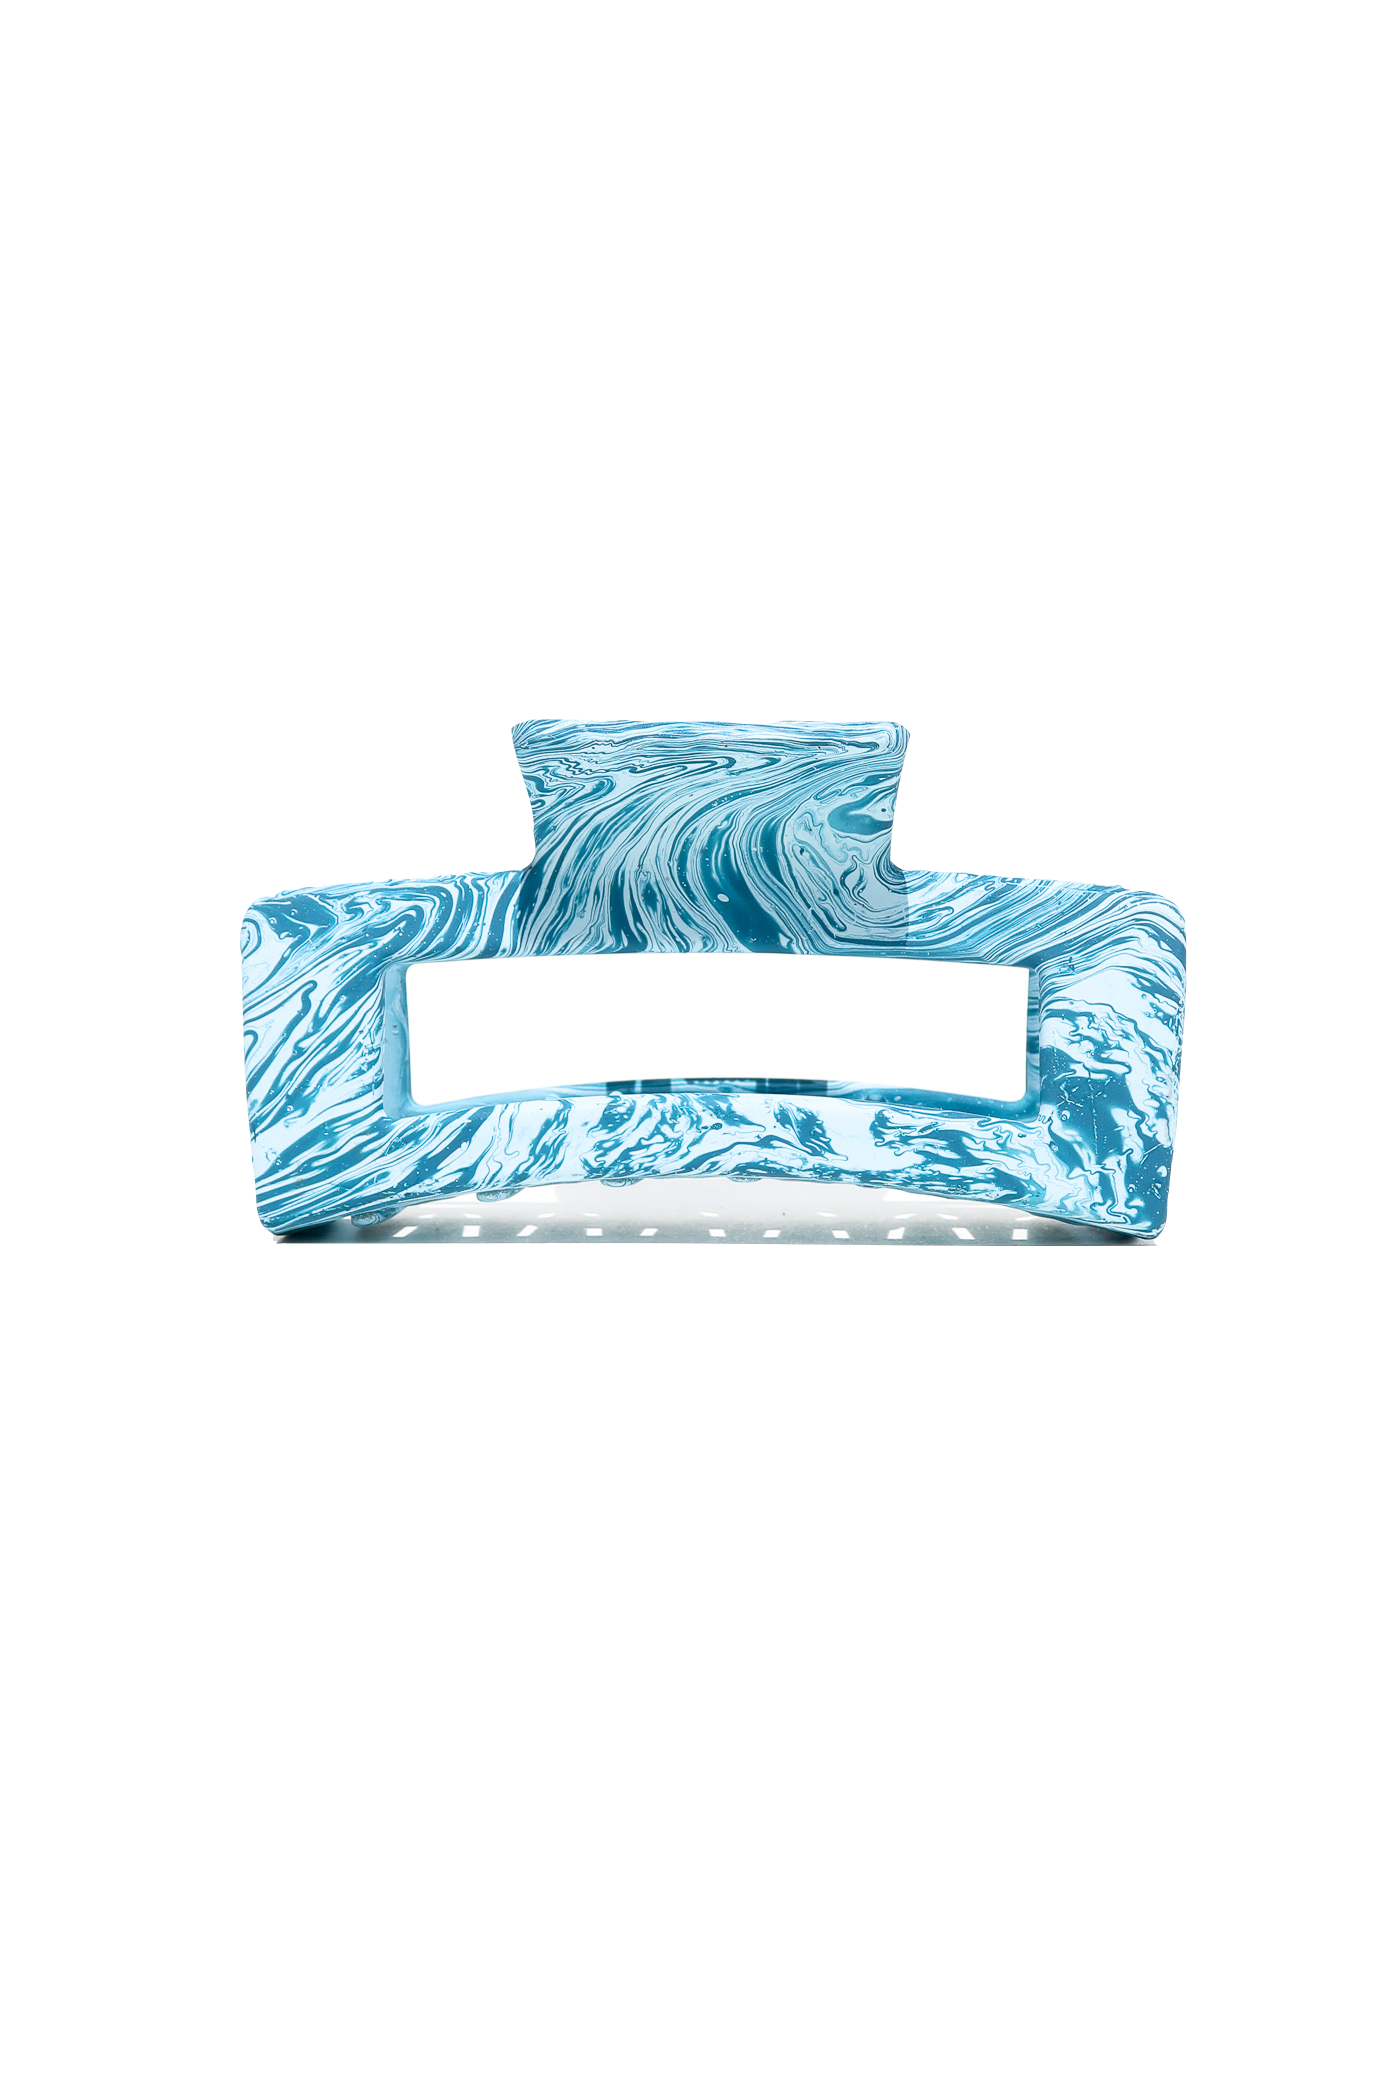 Midi Claw in Blue Waves